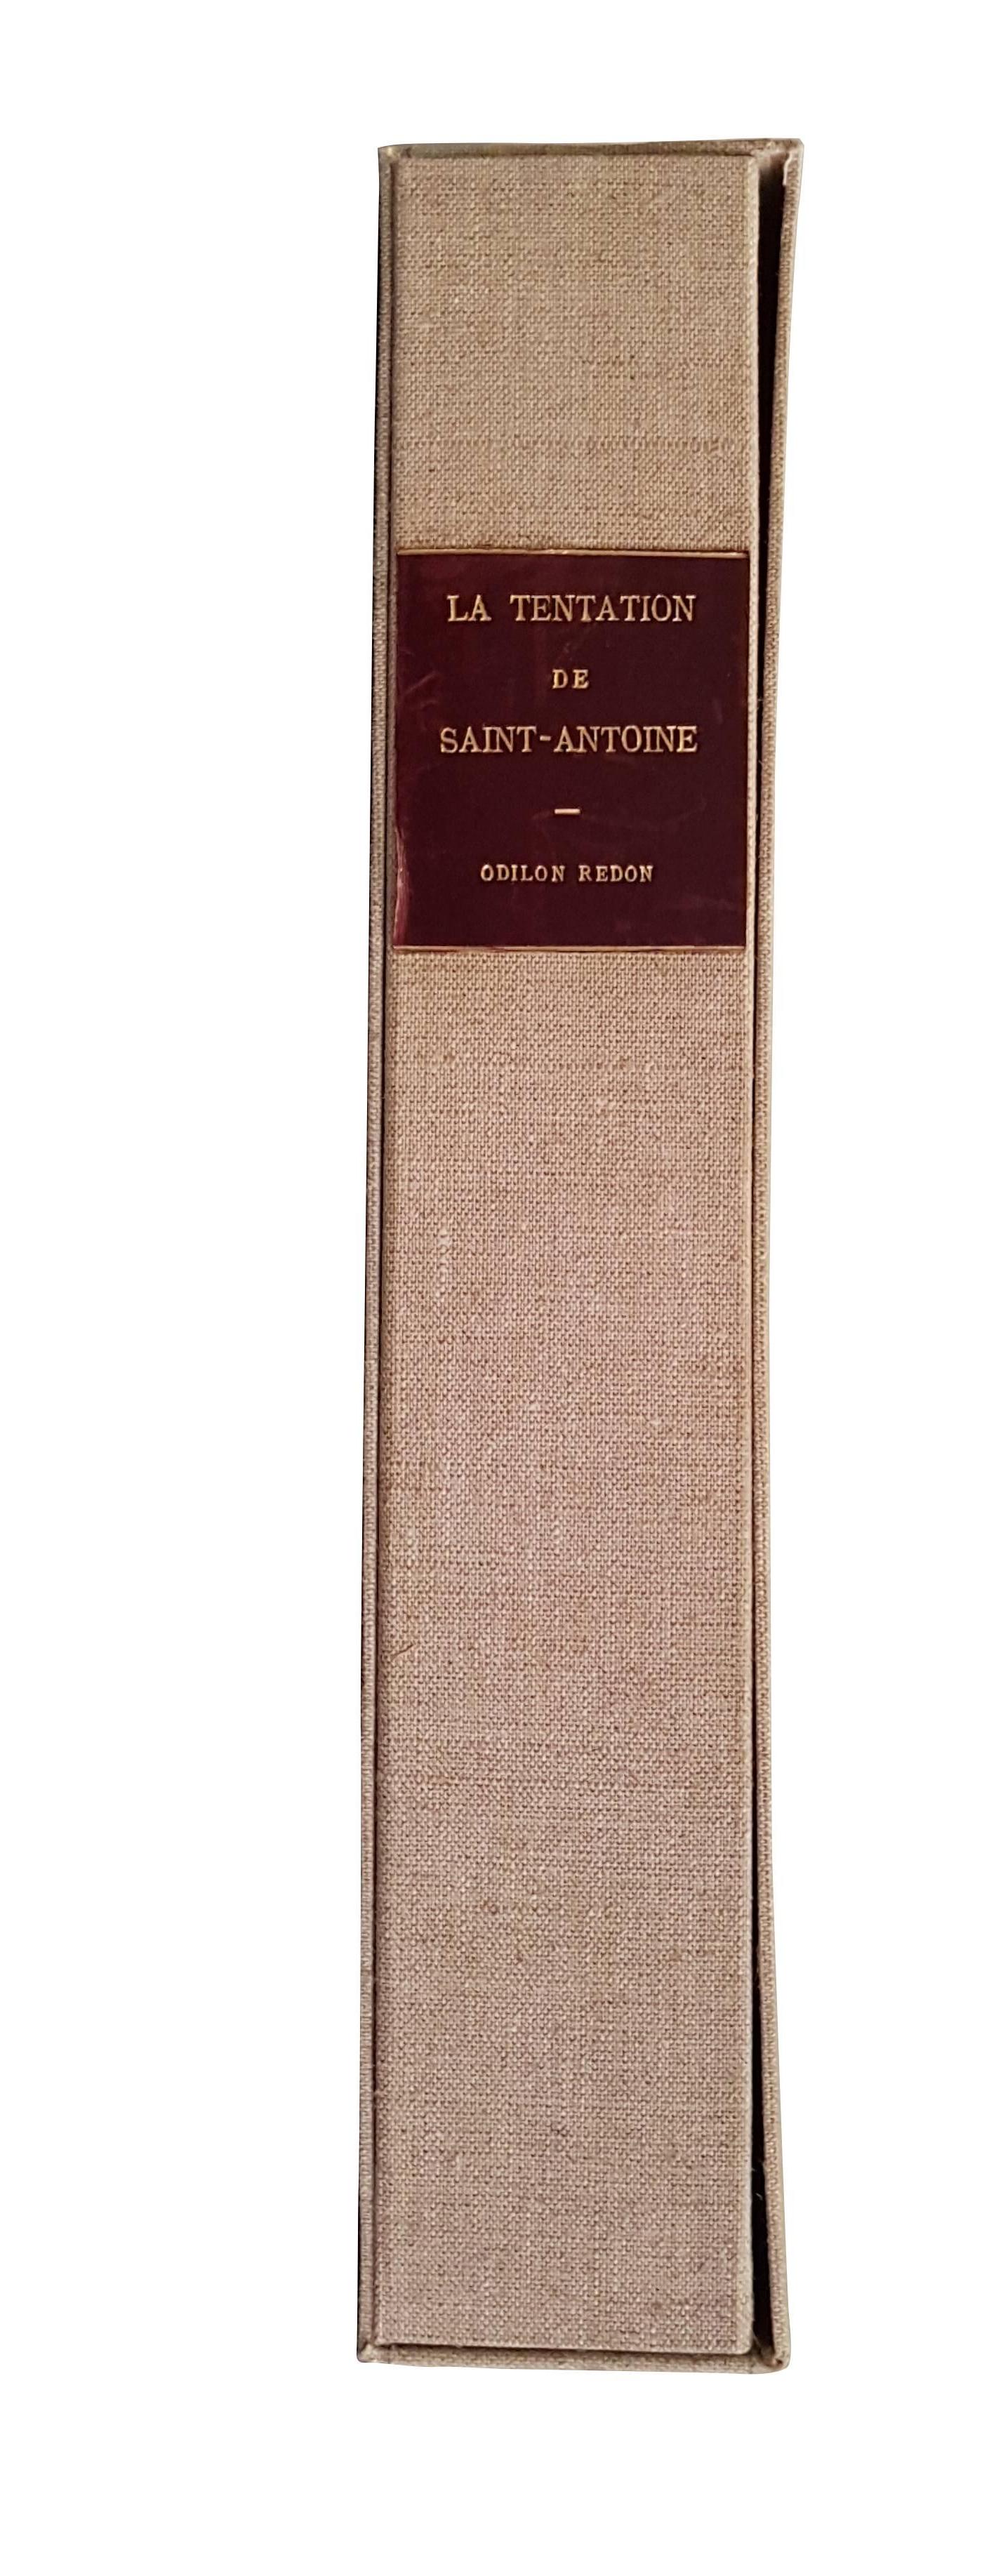 La Tentation de Saint Antoine, Gustave Flaubert's illustrated book by O. Redon - Modern Print by Odilon Redon